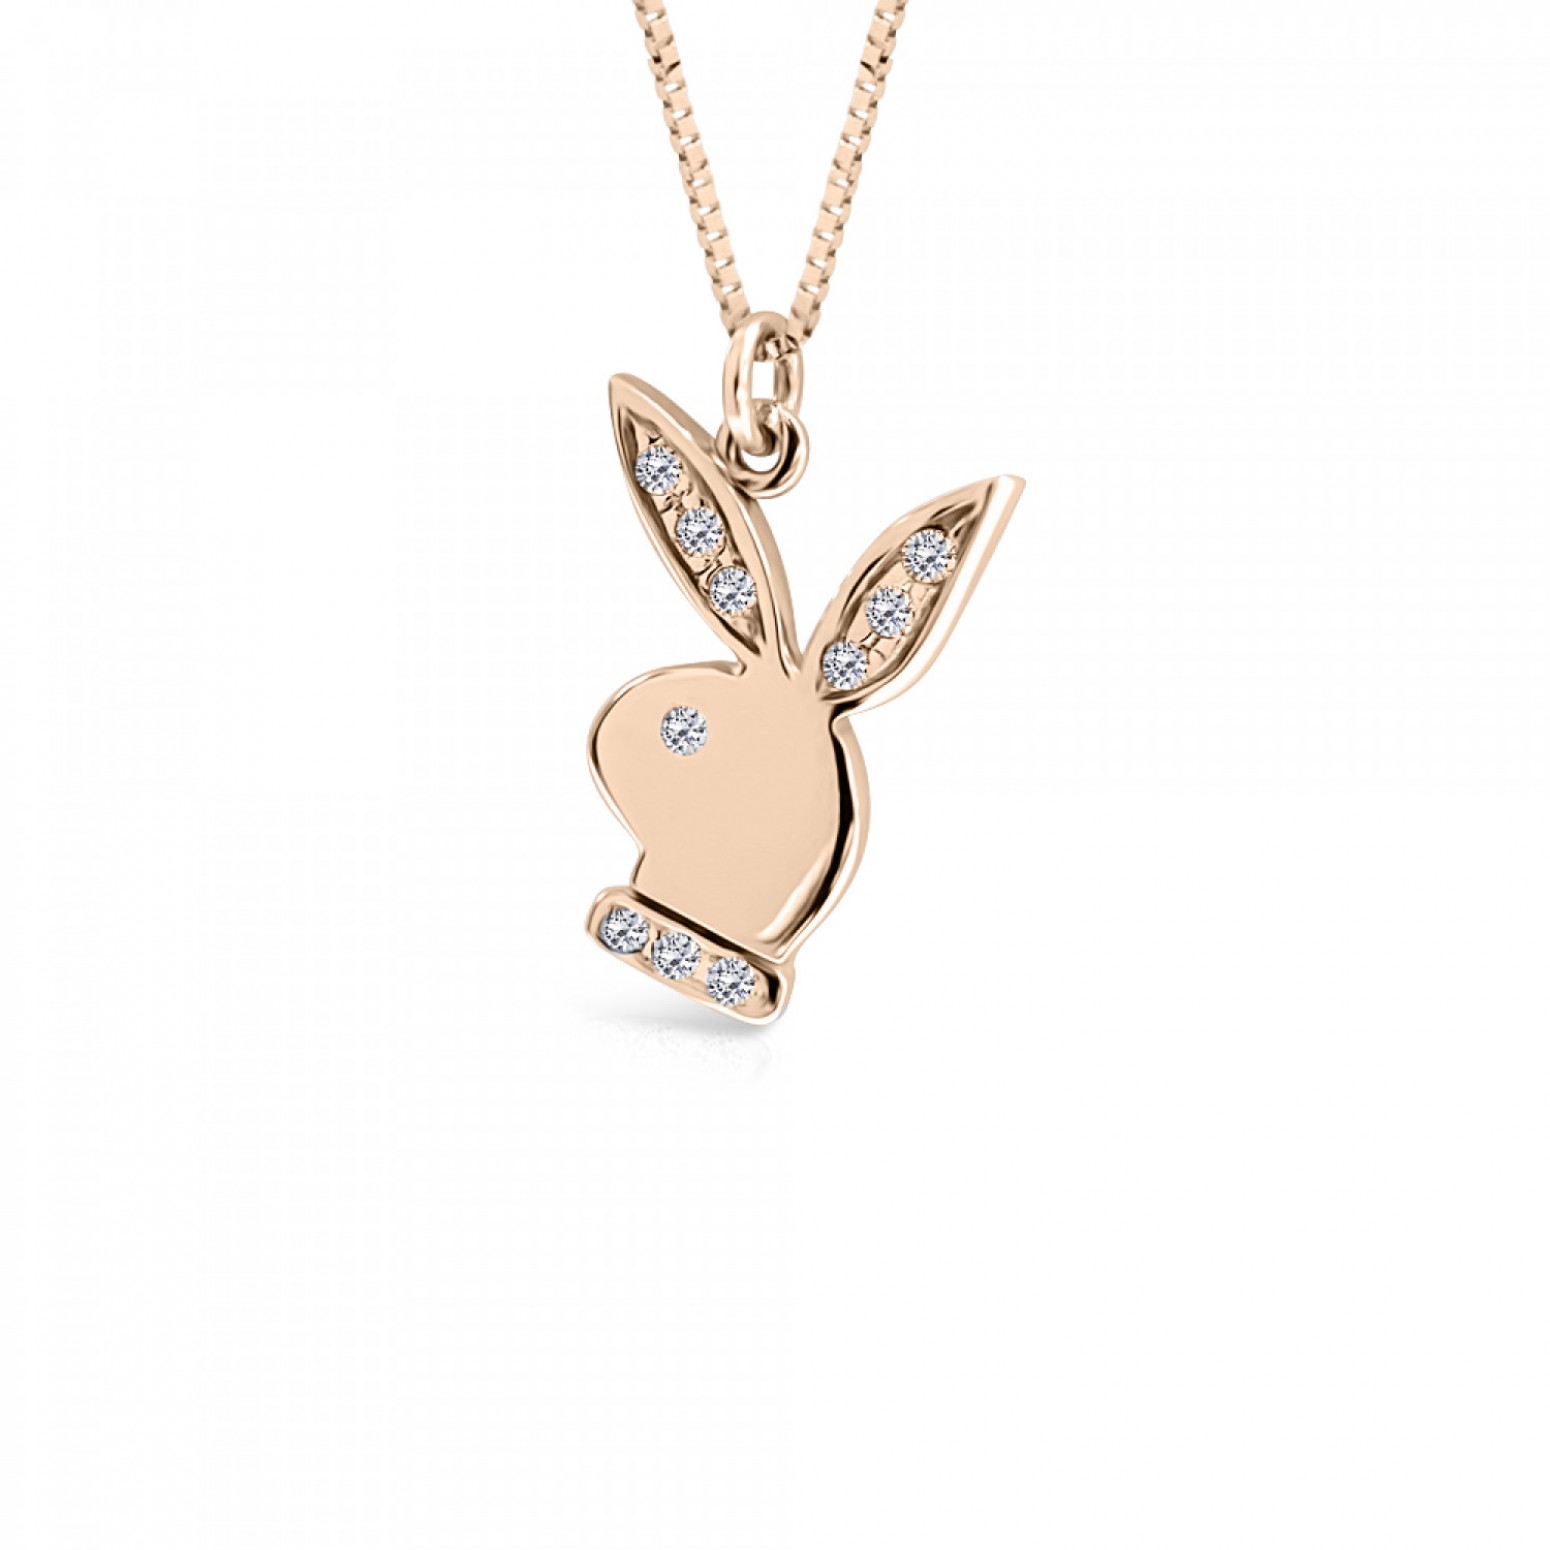 Bunny necklace, Κ14 pink gold with zircon, ko1858 NECKLACES Κοσμηματα - chrilia.gr